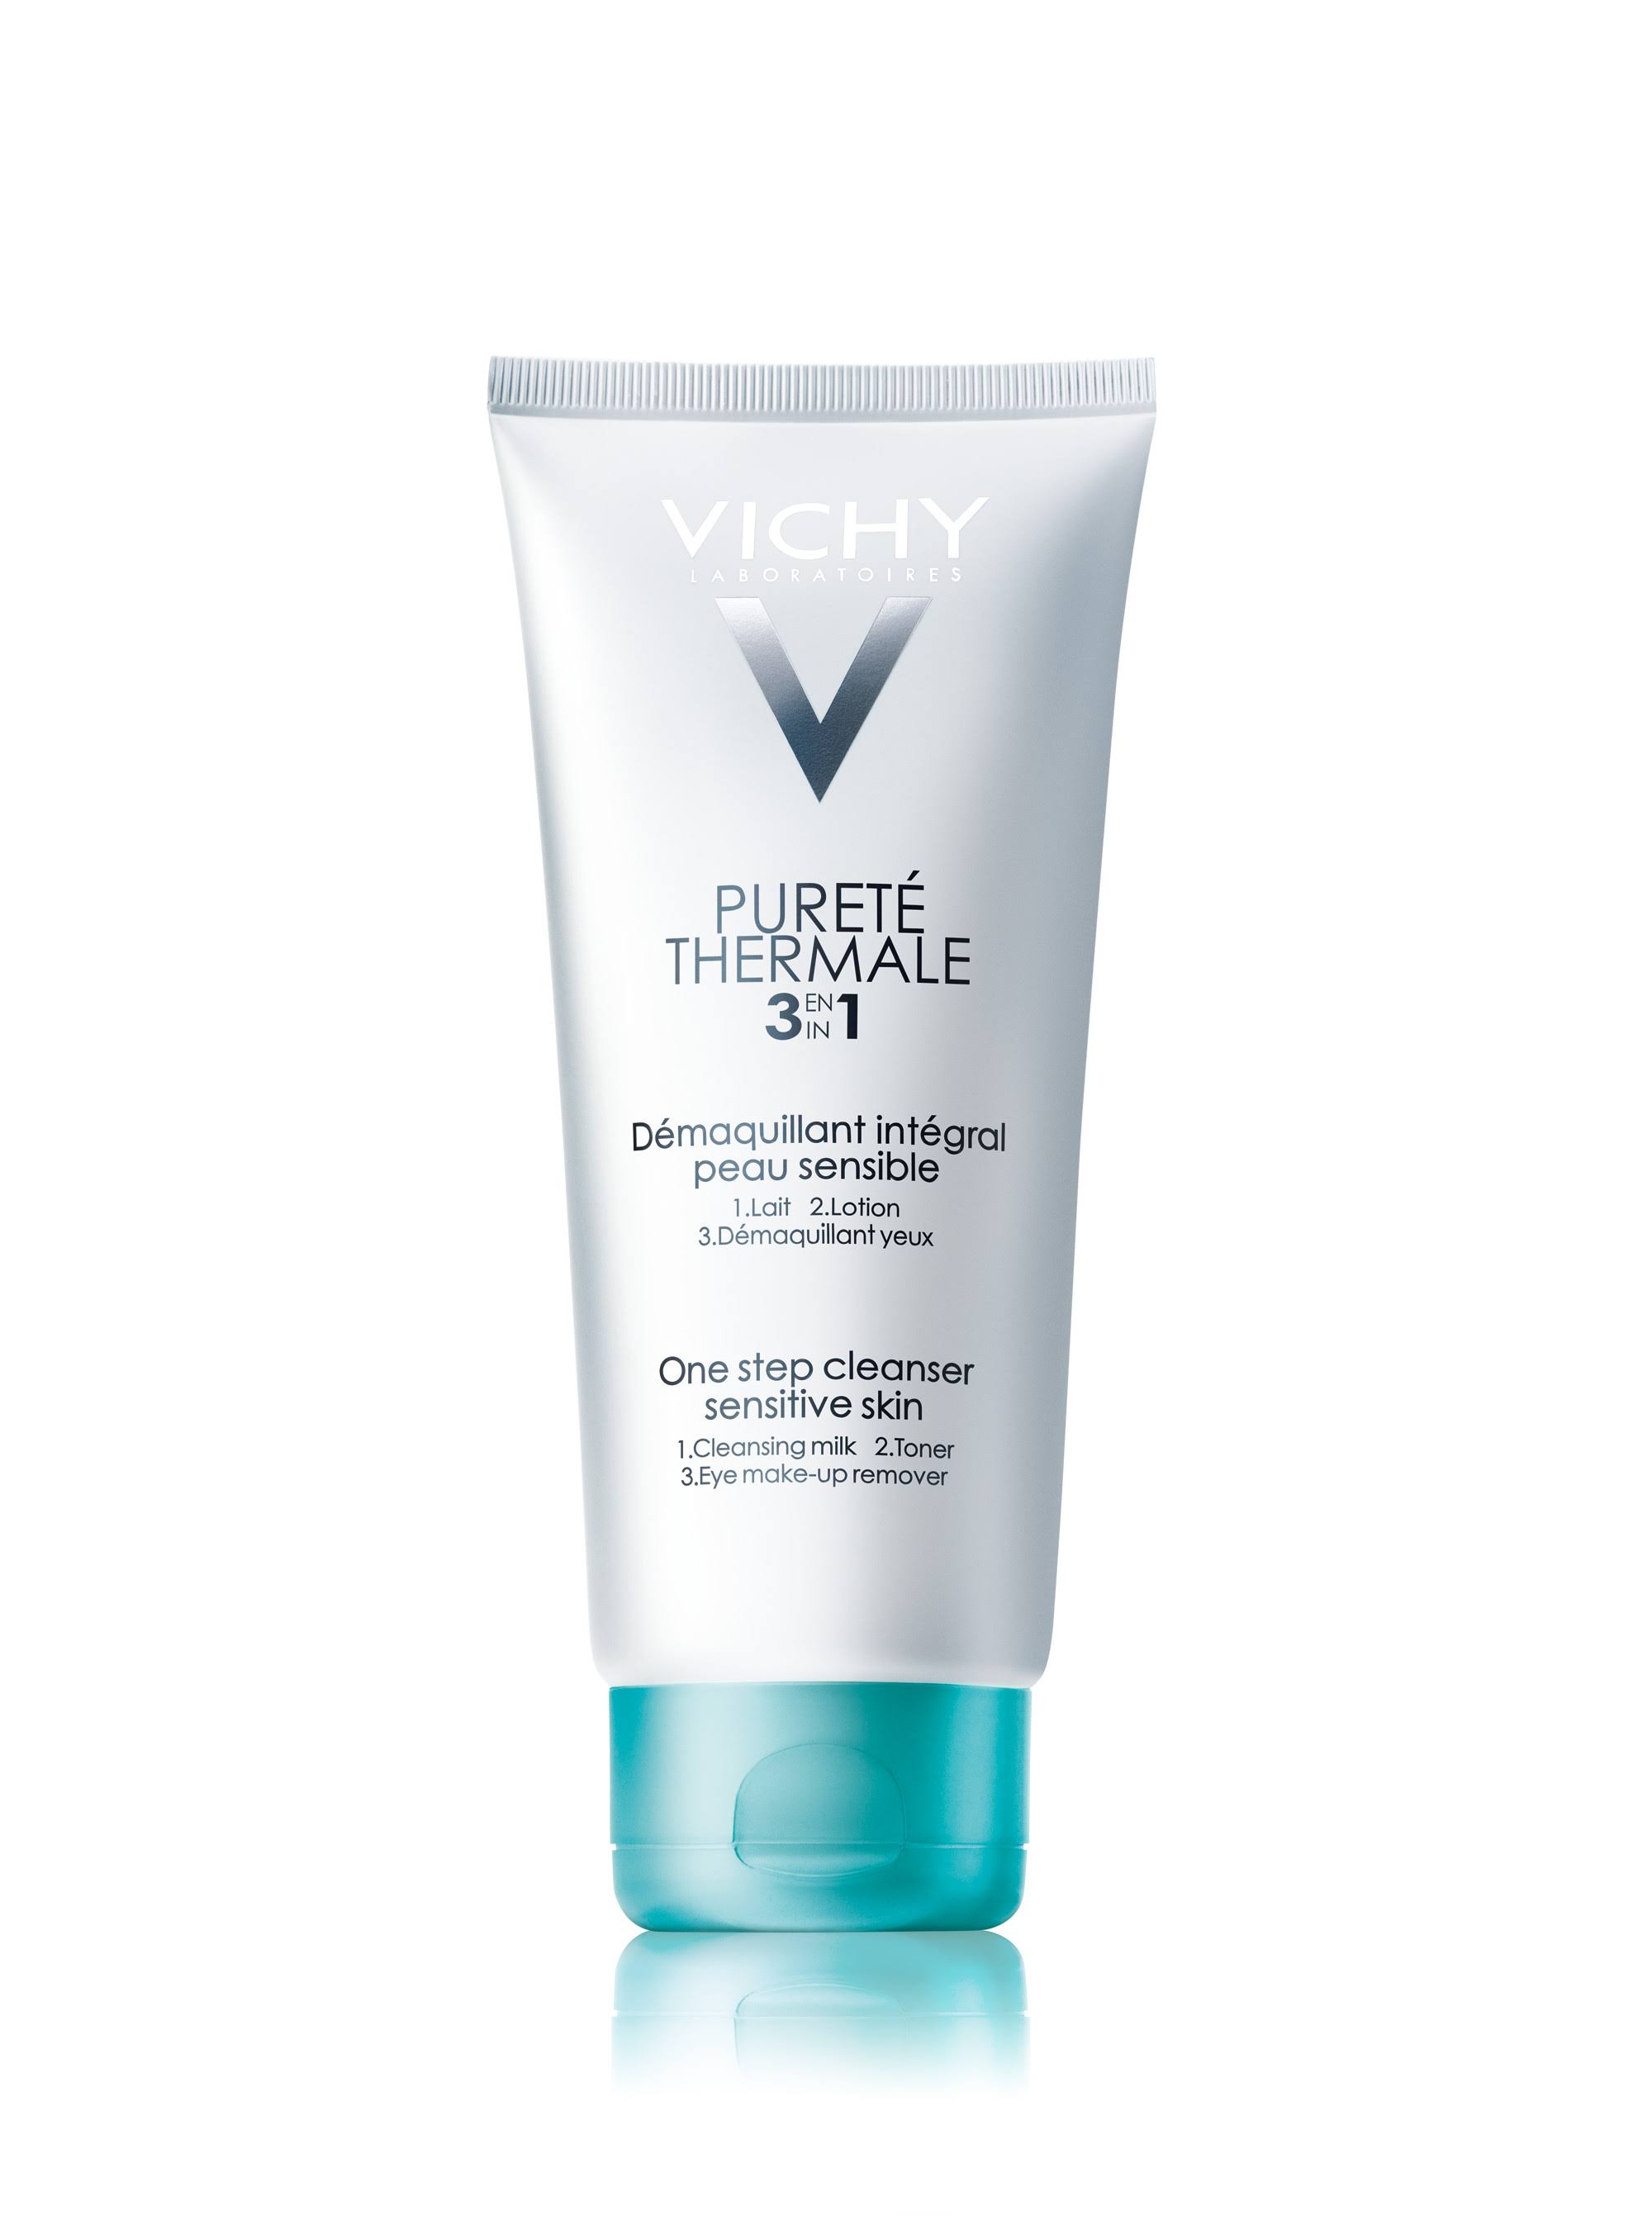 Vichy Purete Thermale 3in1 One Step Cleanser - Sensitive Skin, 200ml